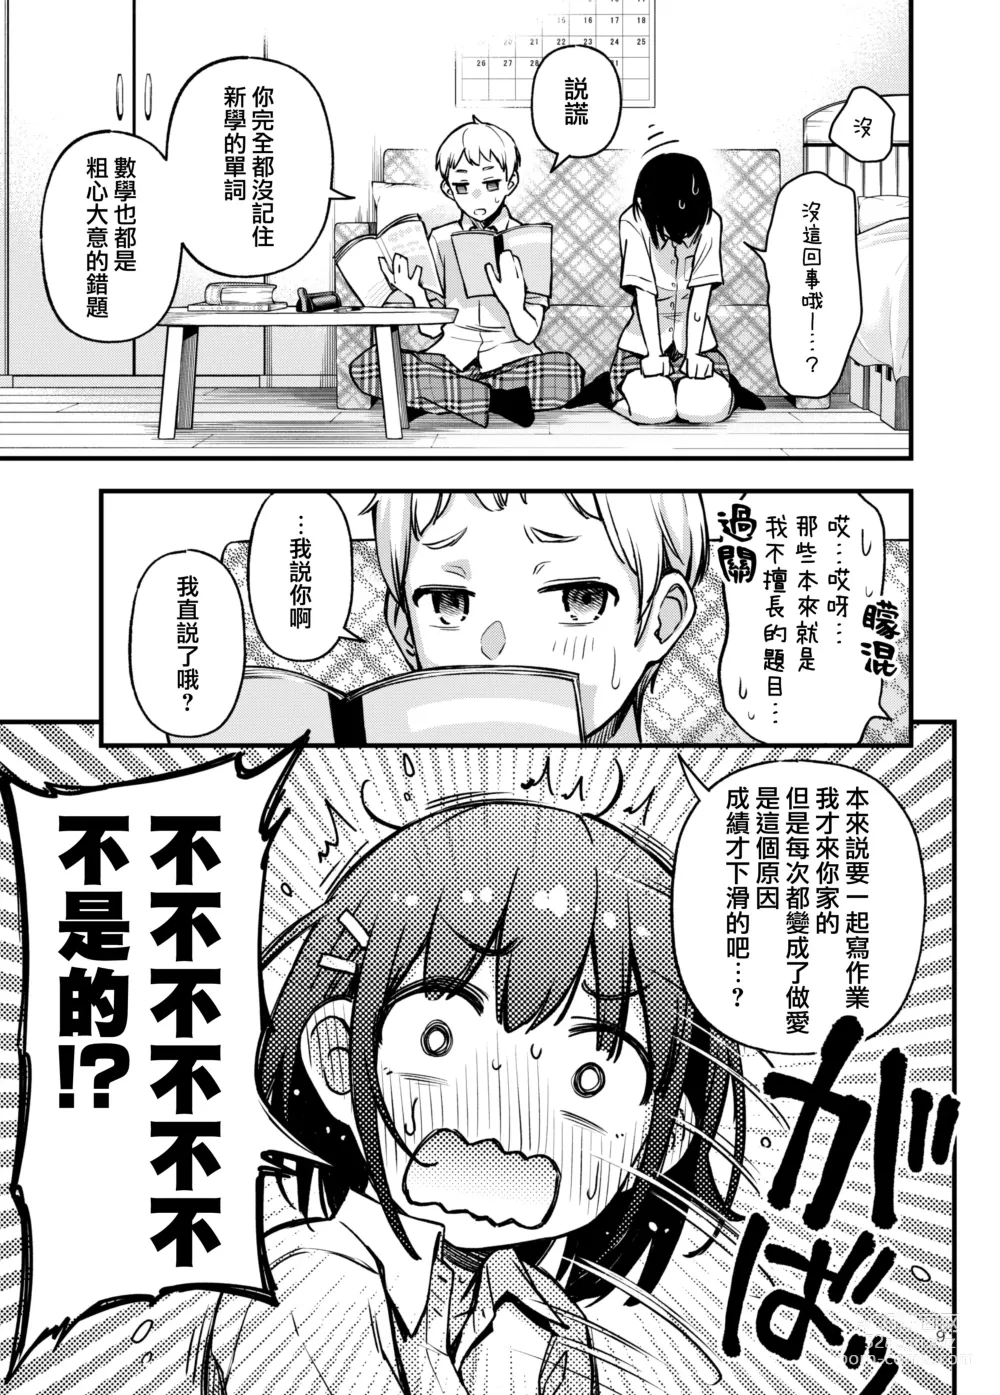 Page 9 of doujinshi 与处男初体验时觉醒的处女 2 #1-4